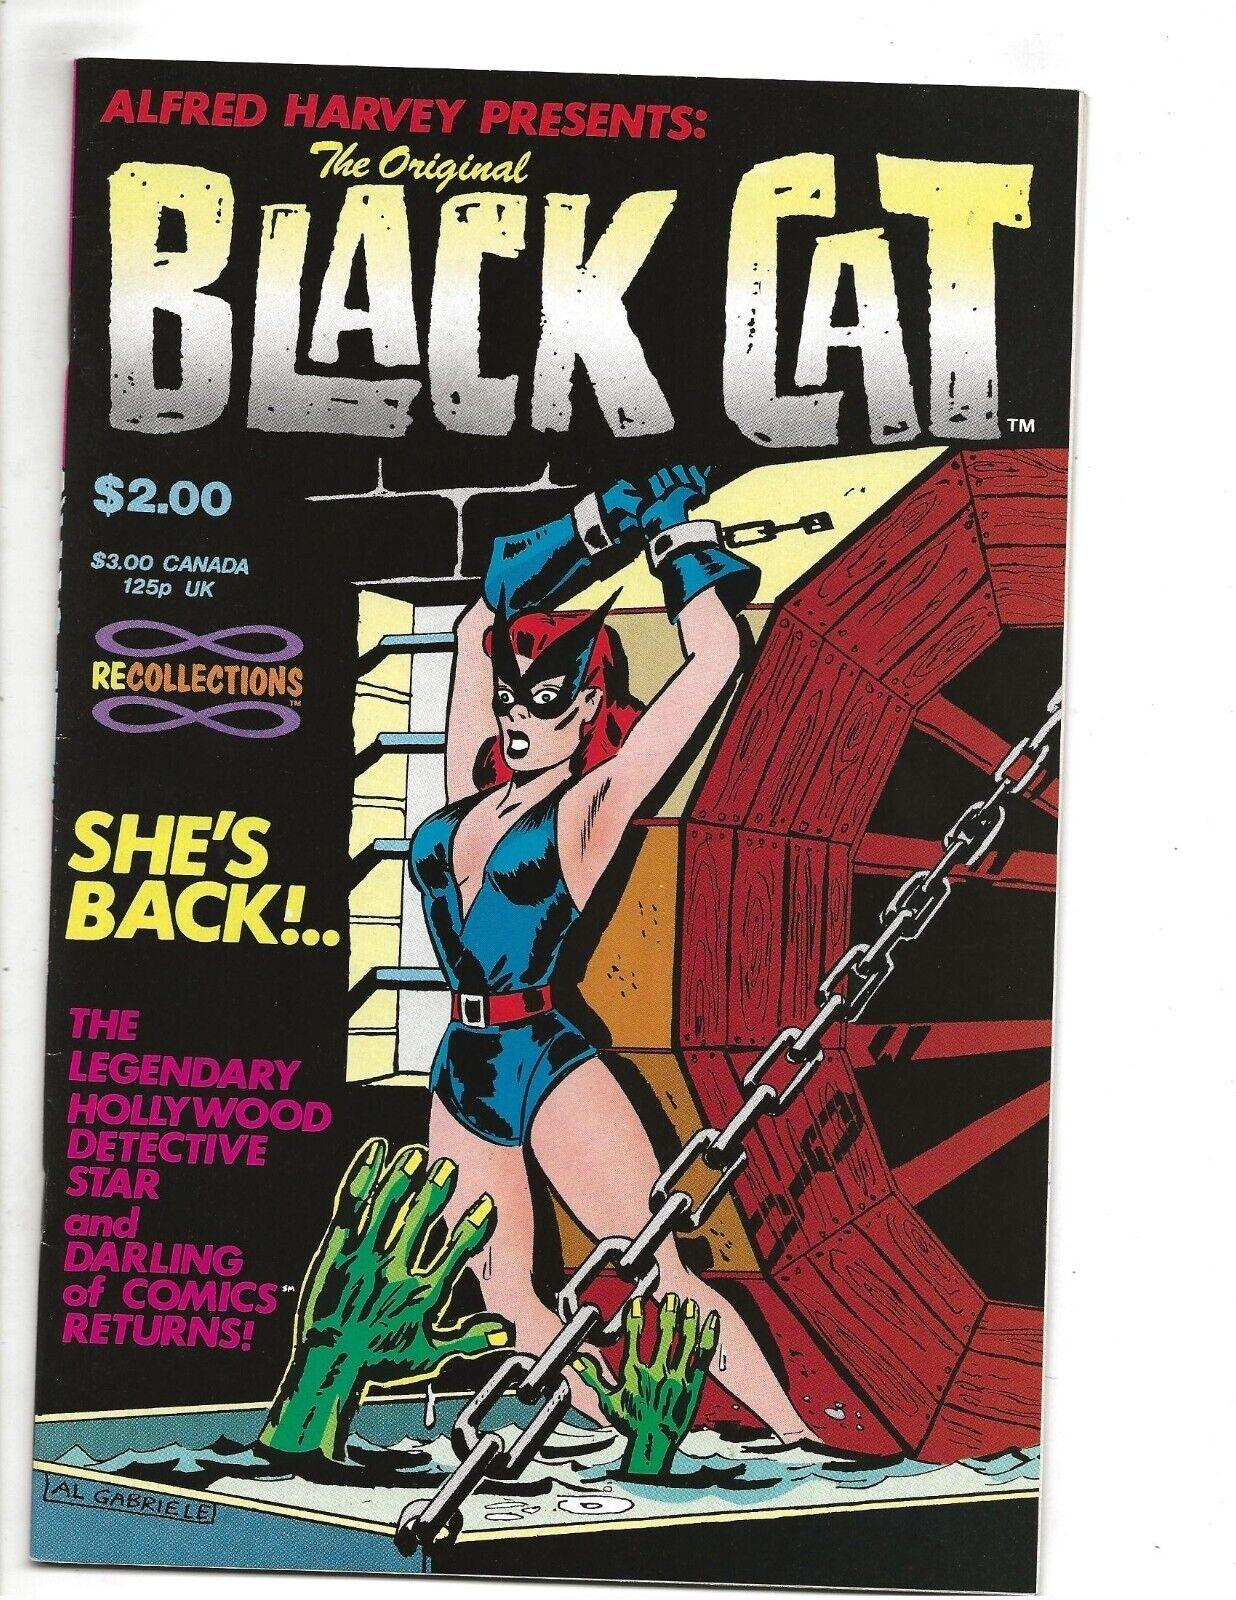 Rare The Original Black Cat #1 by Alfred Harvey - Classic Bondage Cover